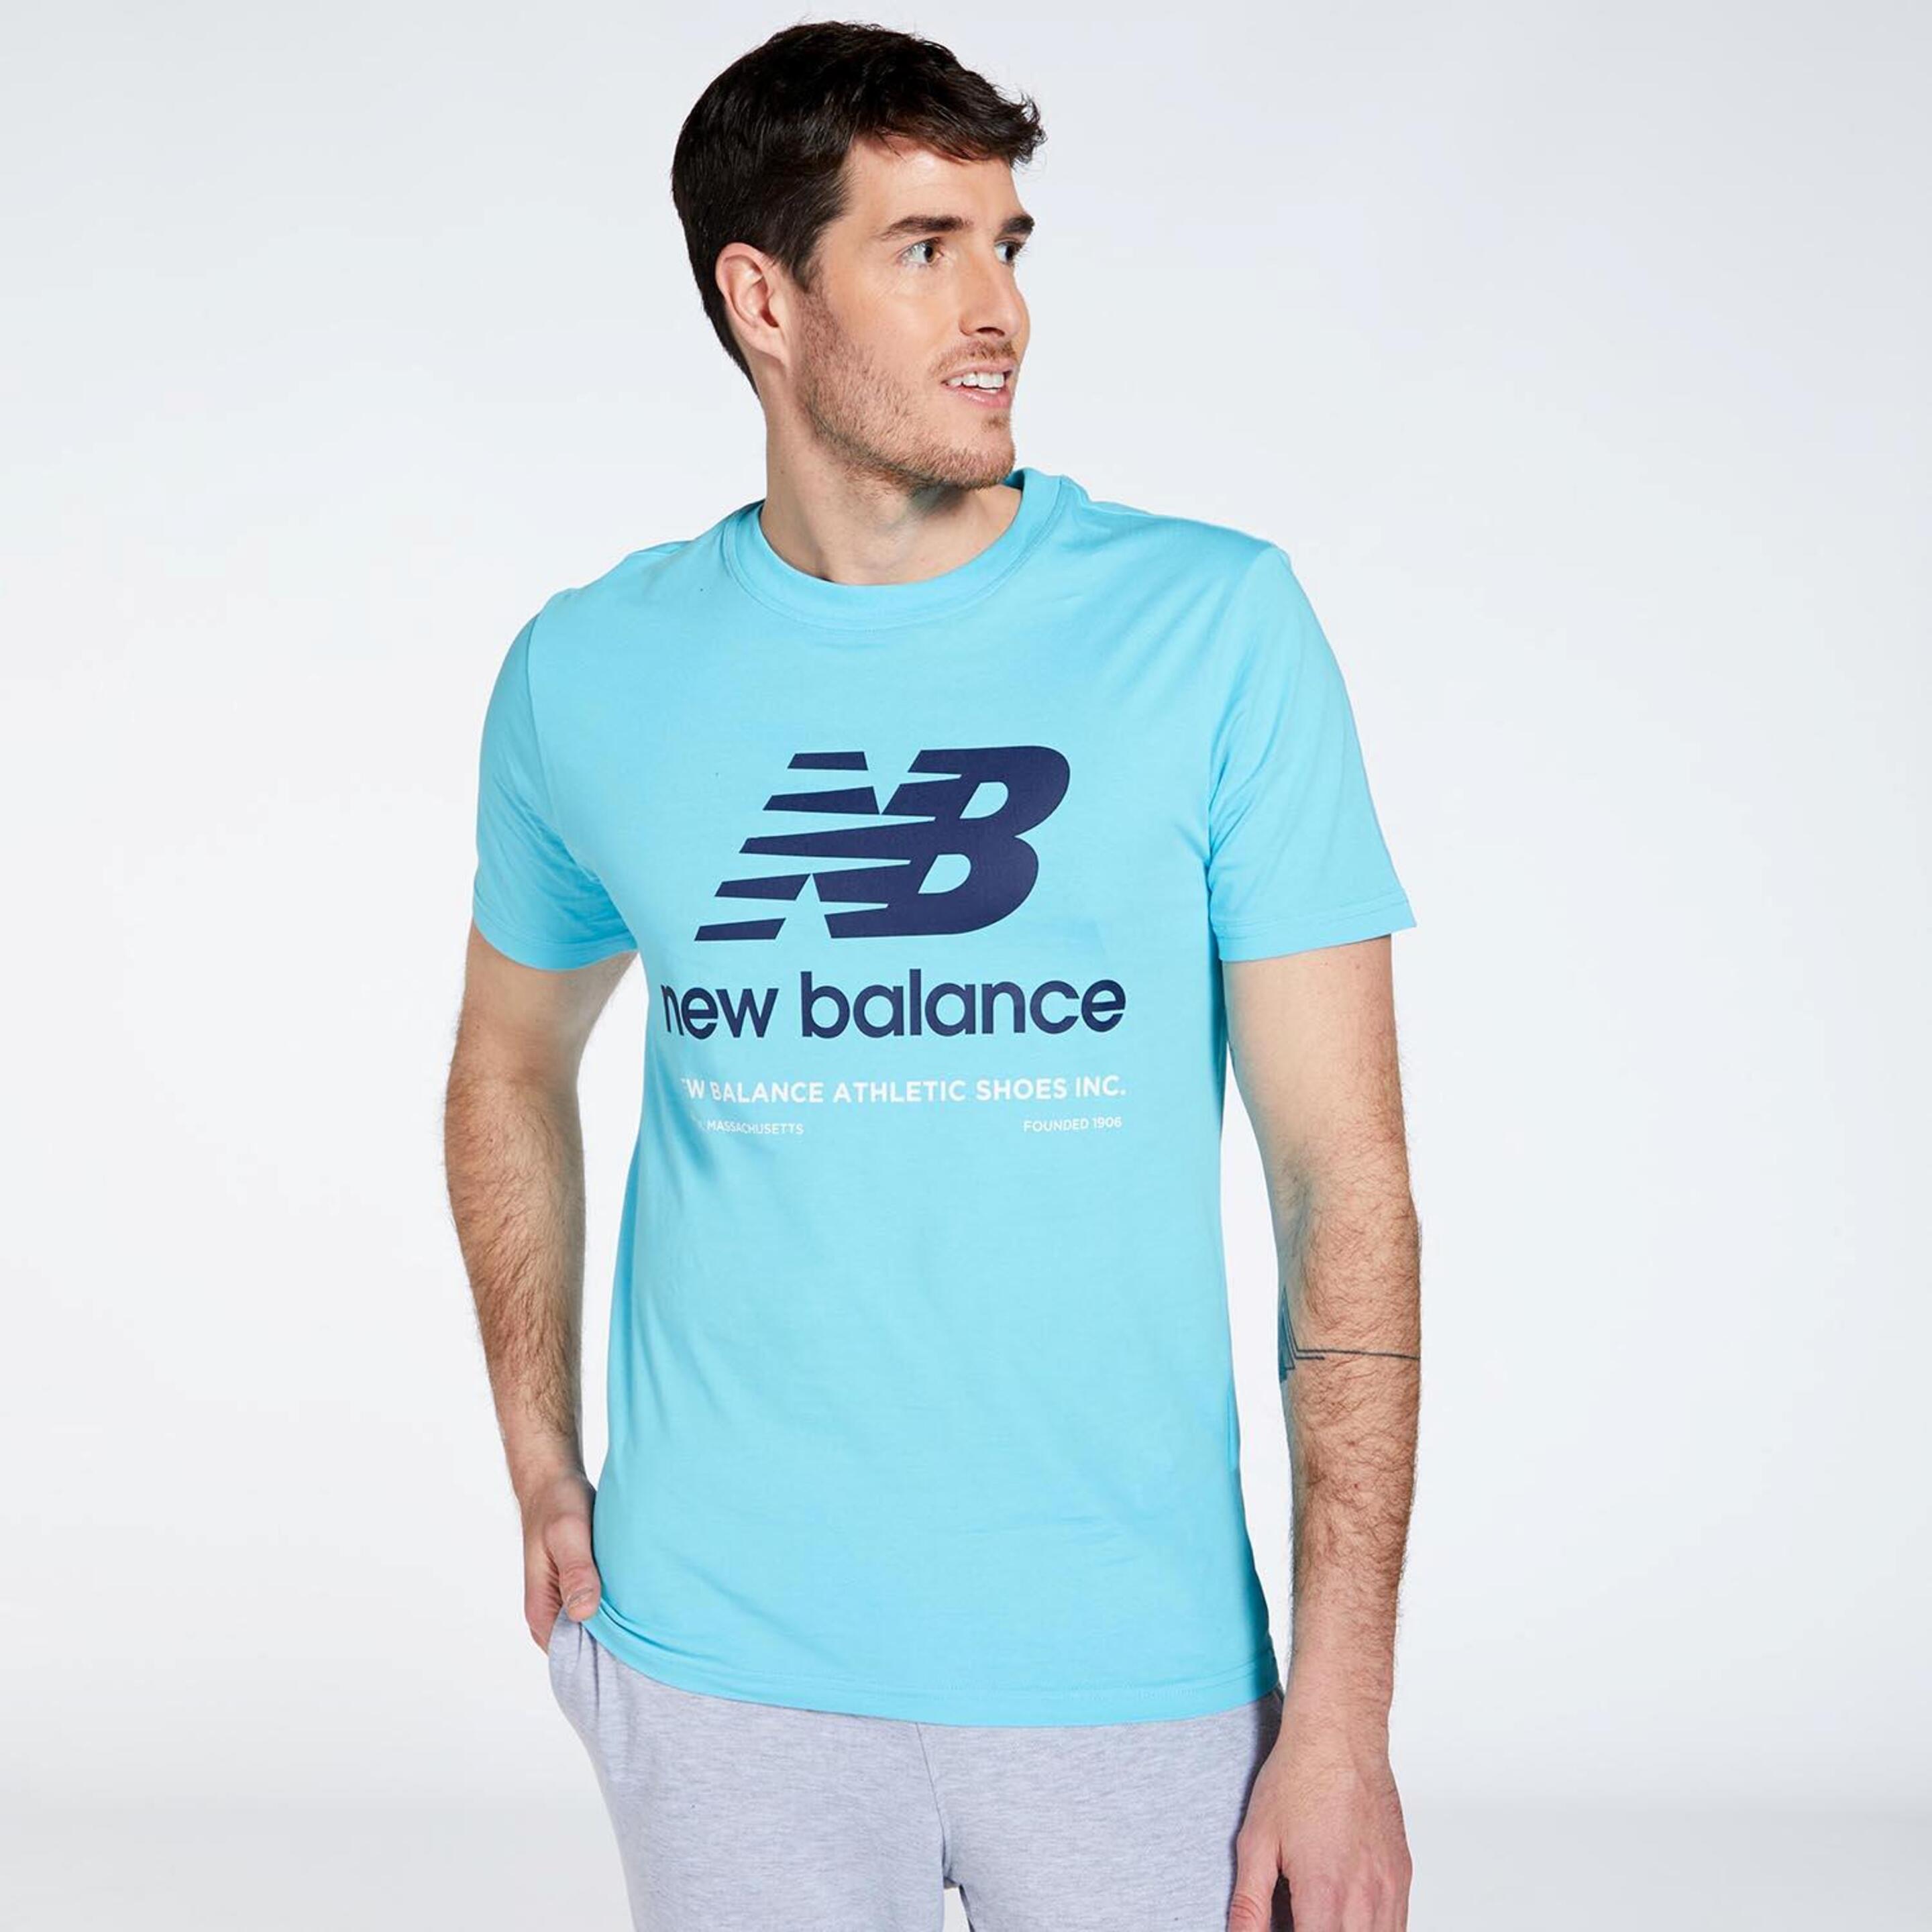 New Balance Explode - Turquesa - Camiseta Running Hombre